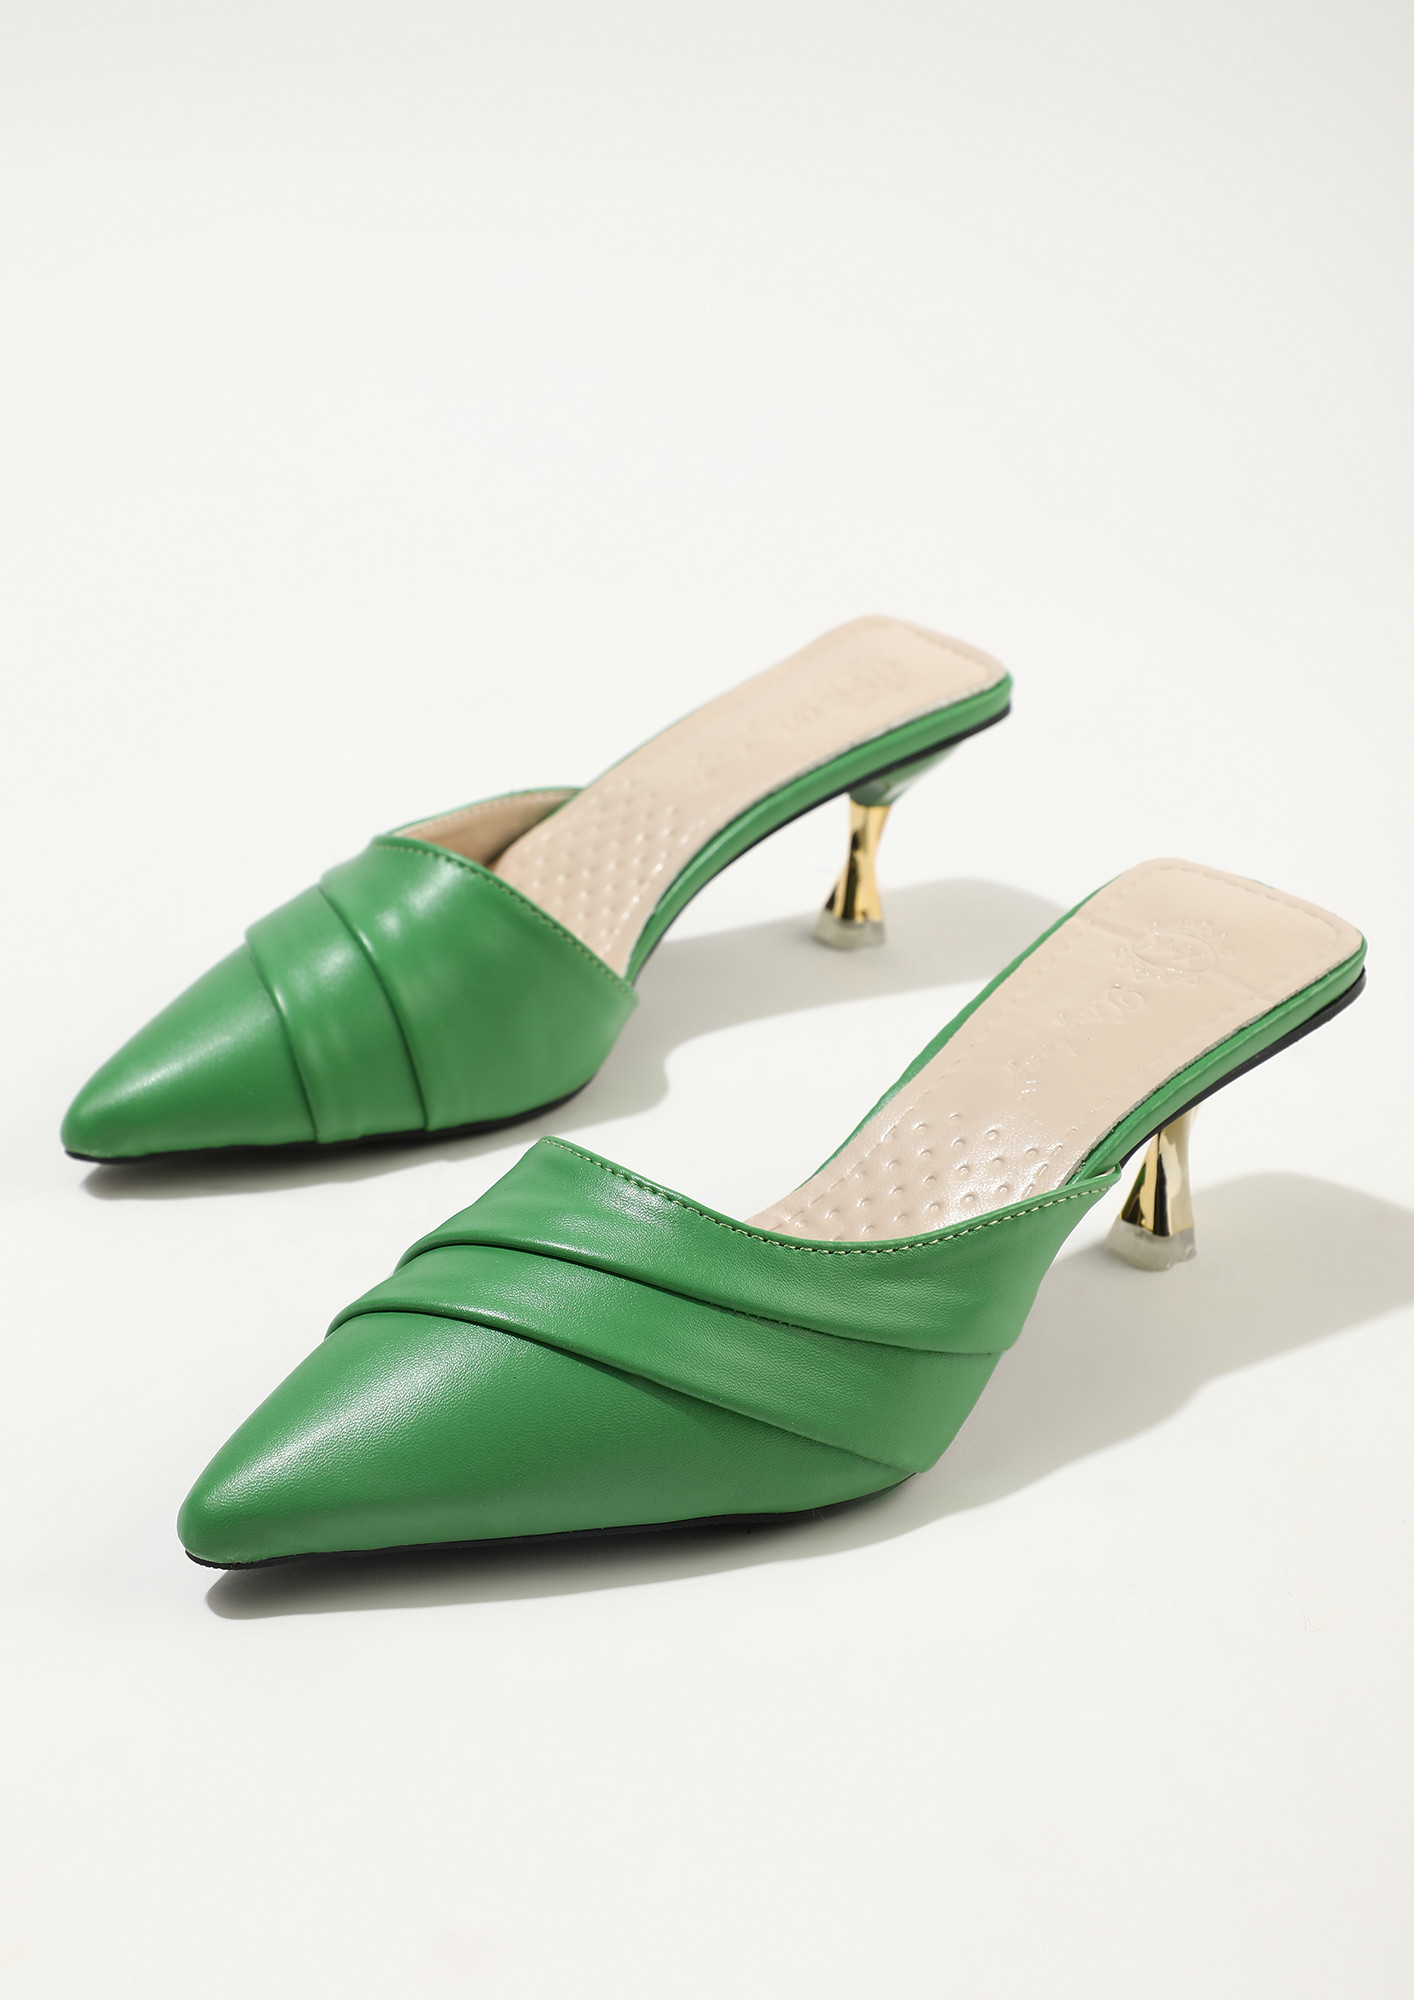 stiletto heels online india buy High heels for women Pencil heels#Stiletto#  stushshoes.com | Designer heels, Fashion shoes, High heel boots